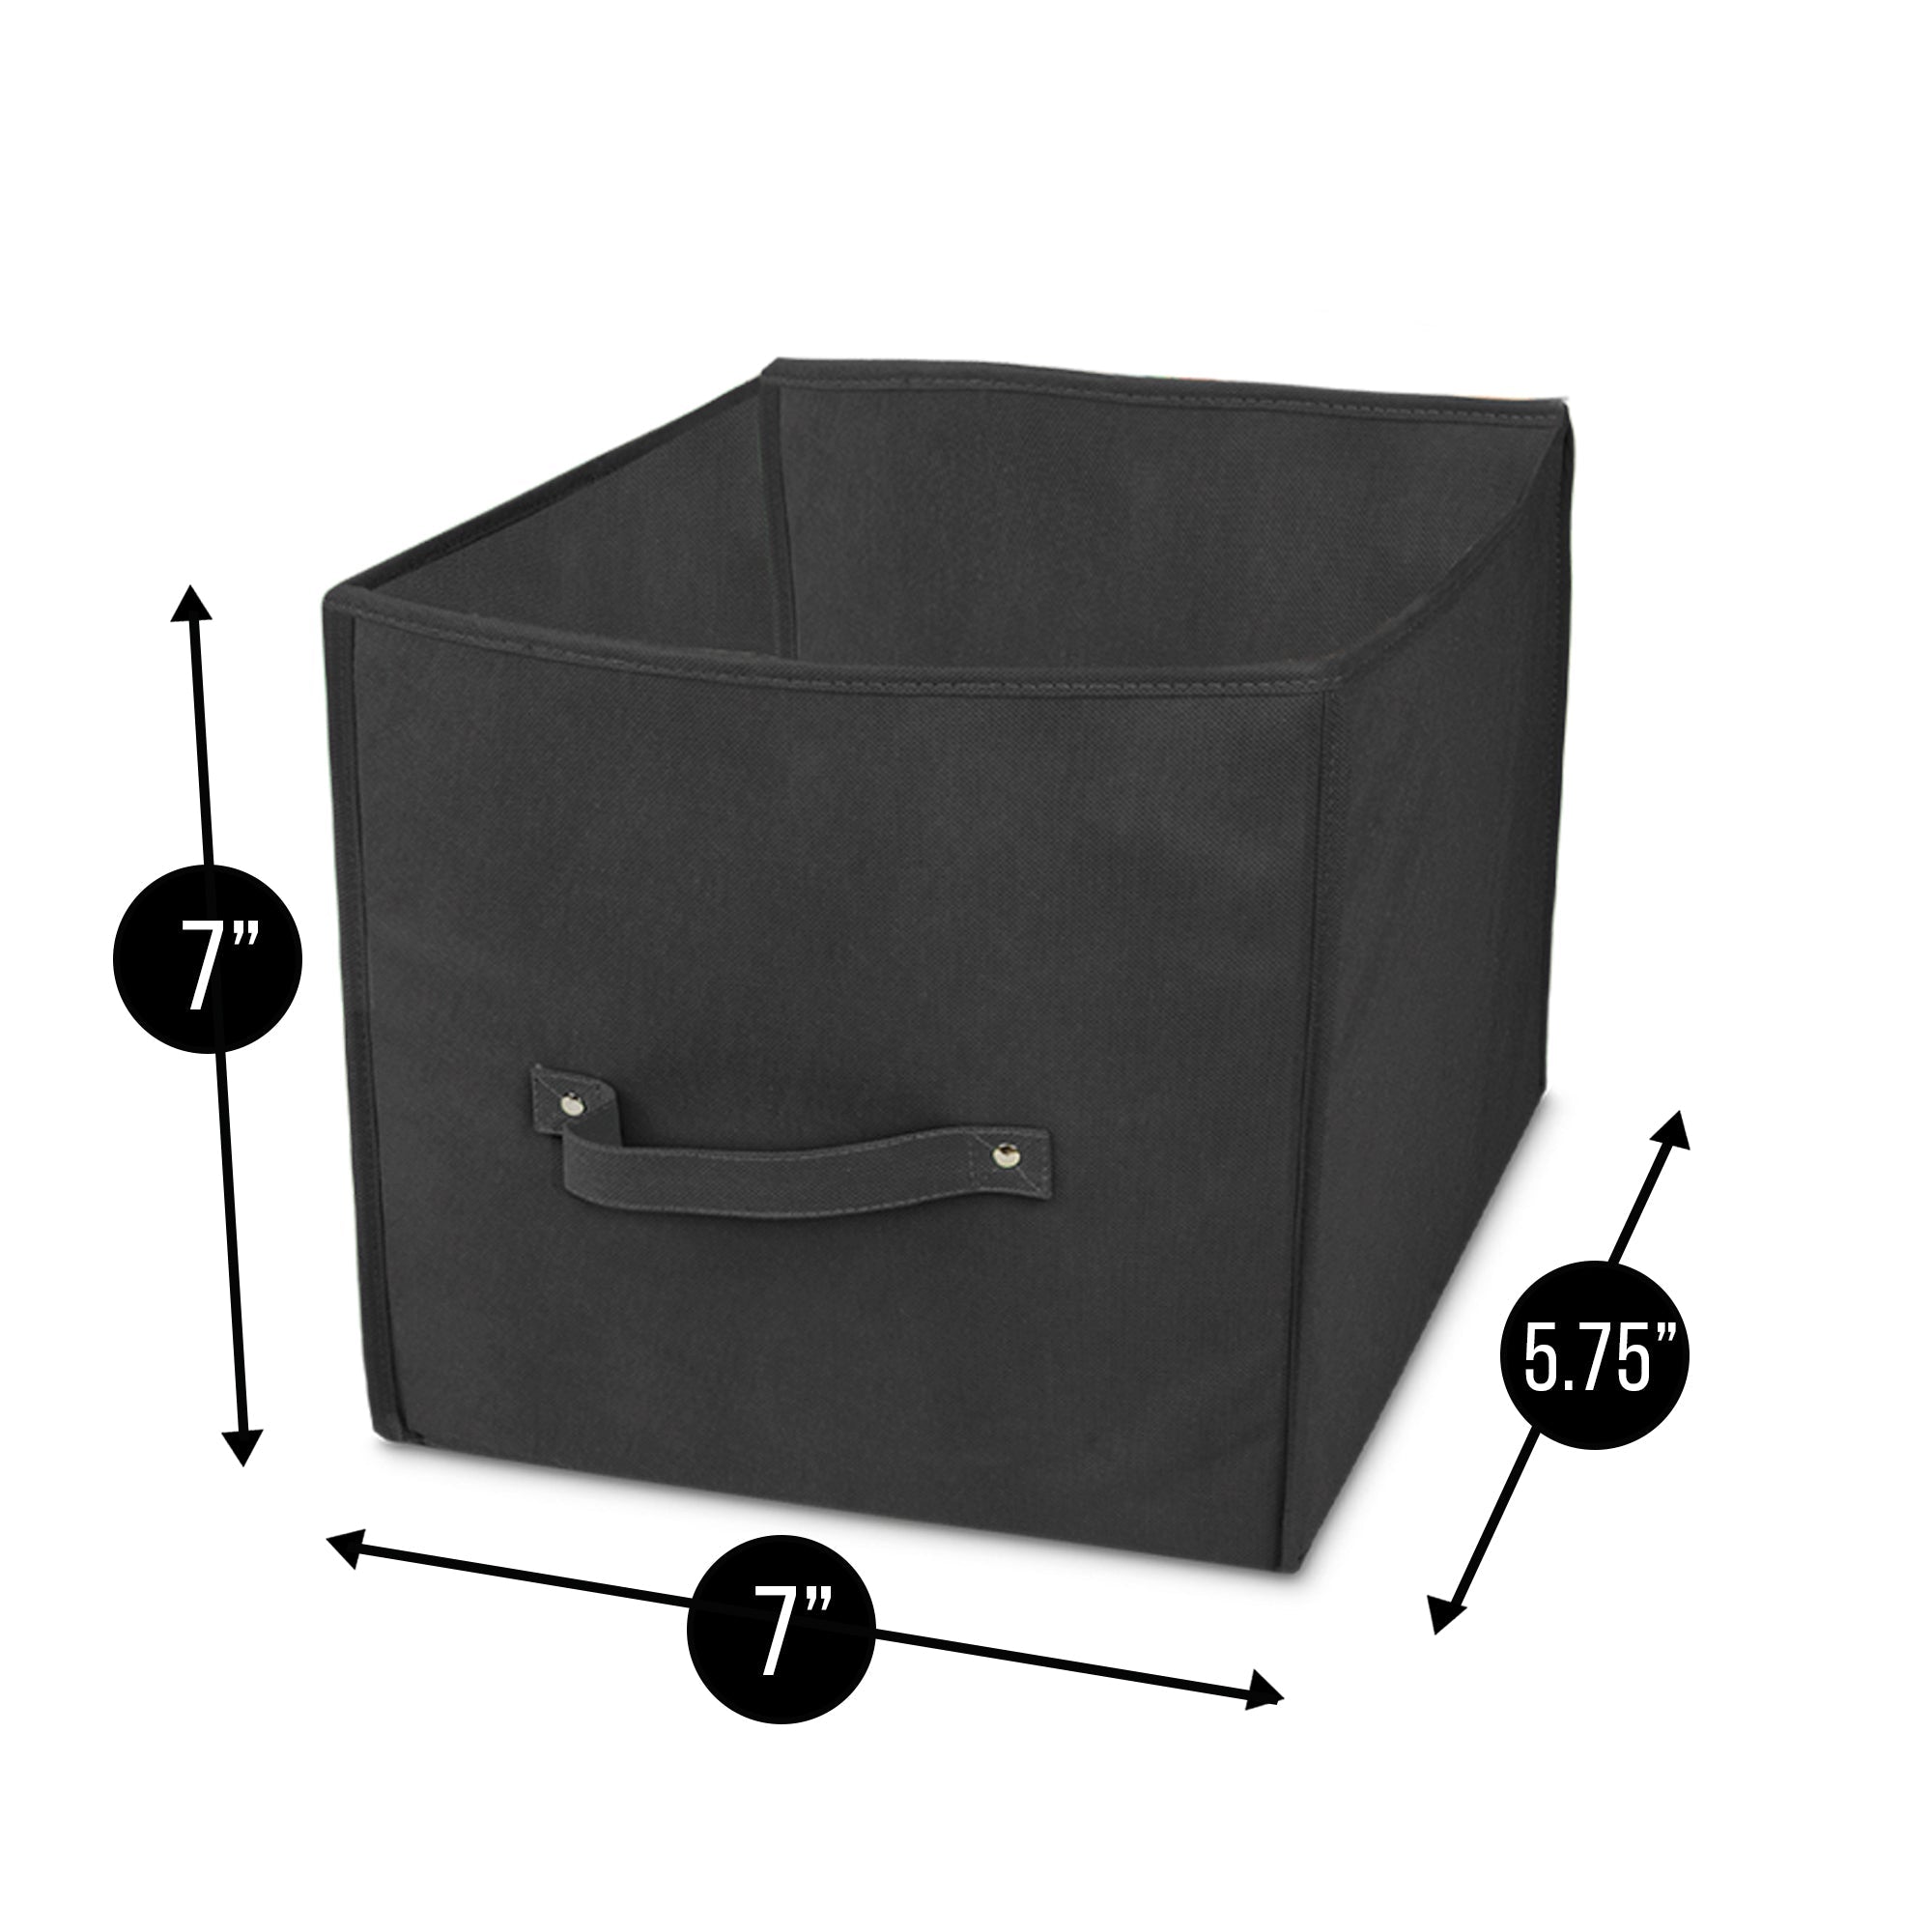 Storage Cube with Handle - 11 x 11 x 11 Inch - Black - Smart Design® 3